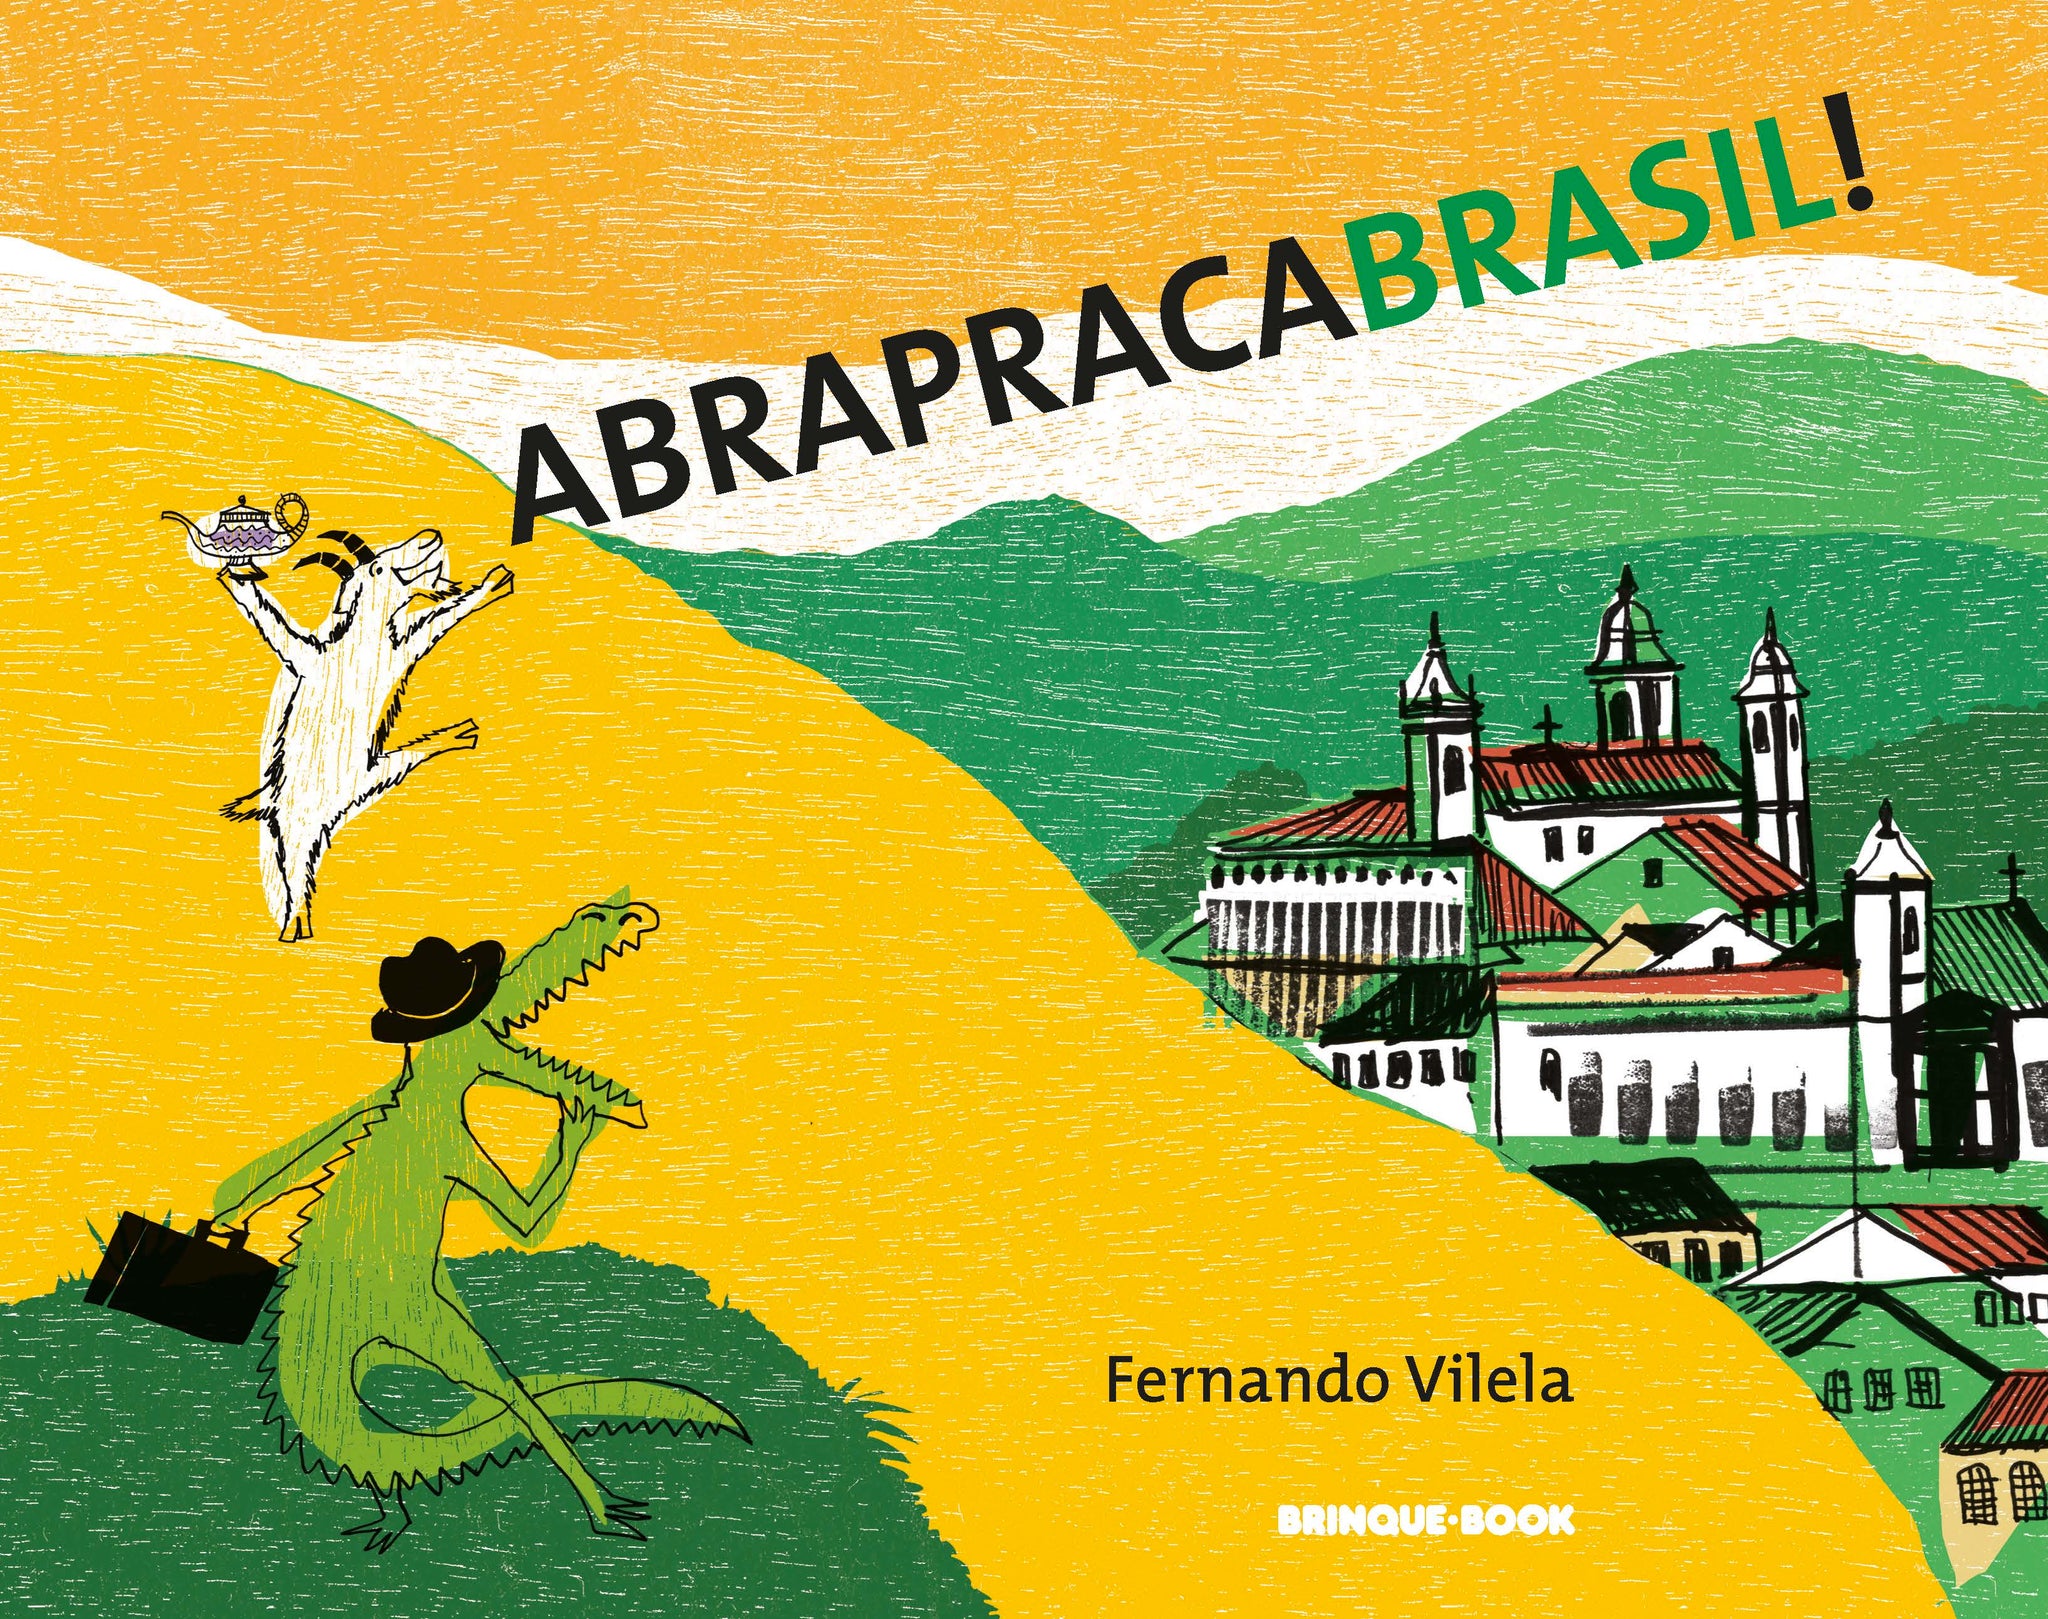 capa livro Abrapracabrasil!, autor(a) Fernando Vilela